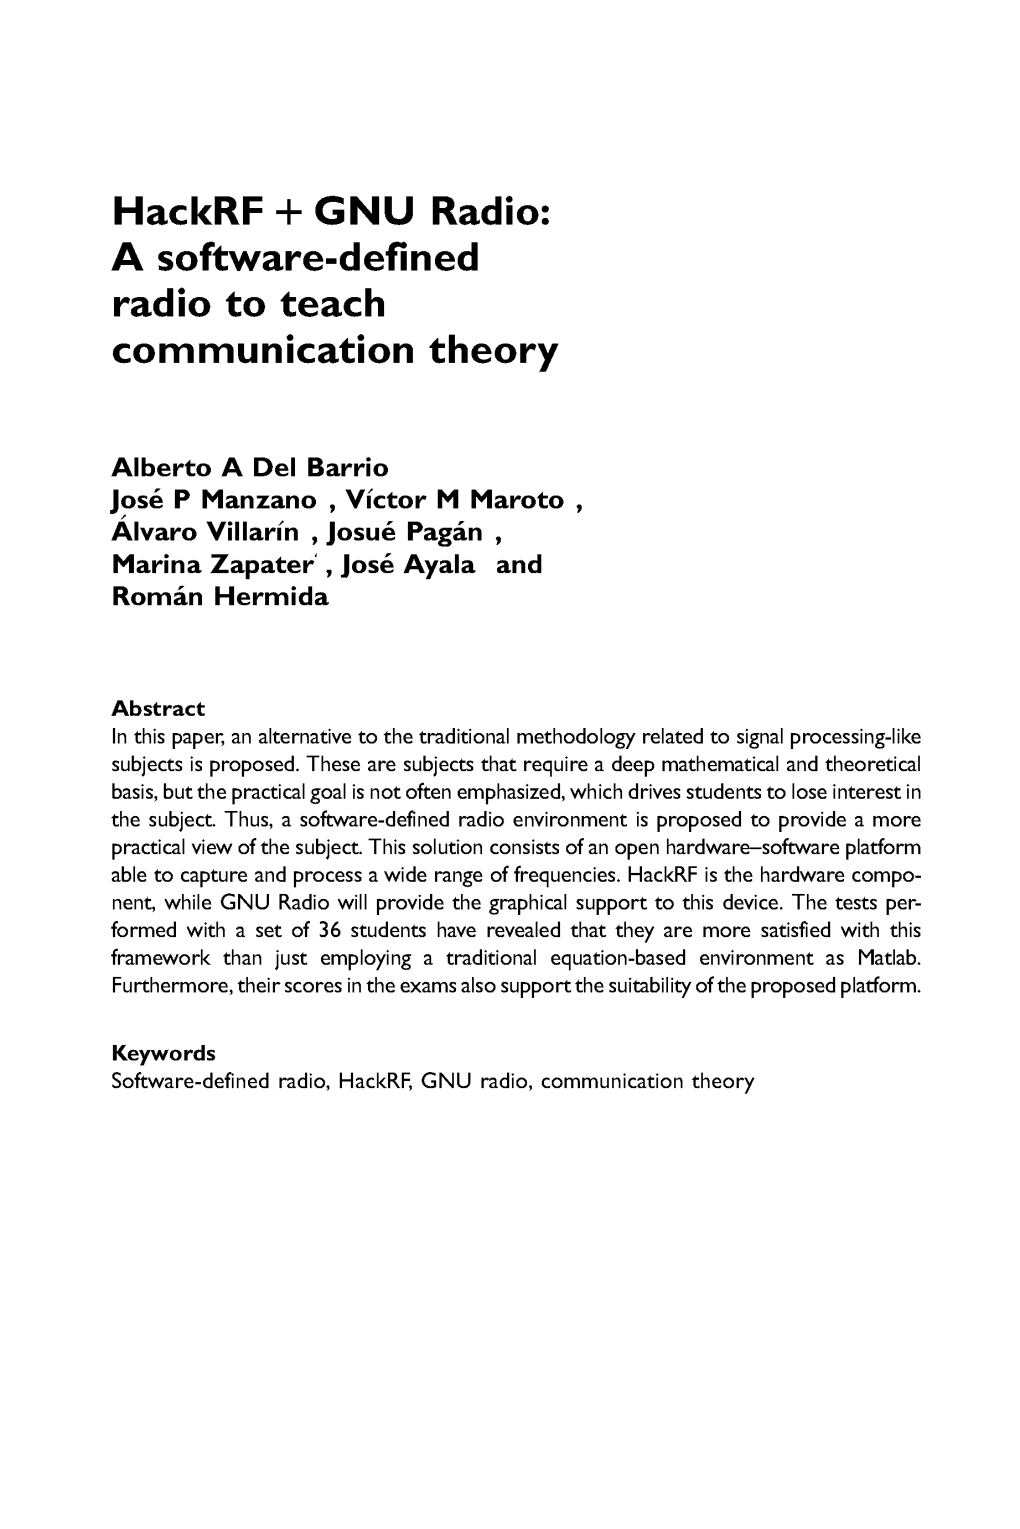 Hackrf + GNU Radio: a Software-Defined Radio to Teach Communication Theory